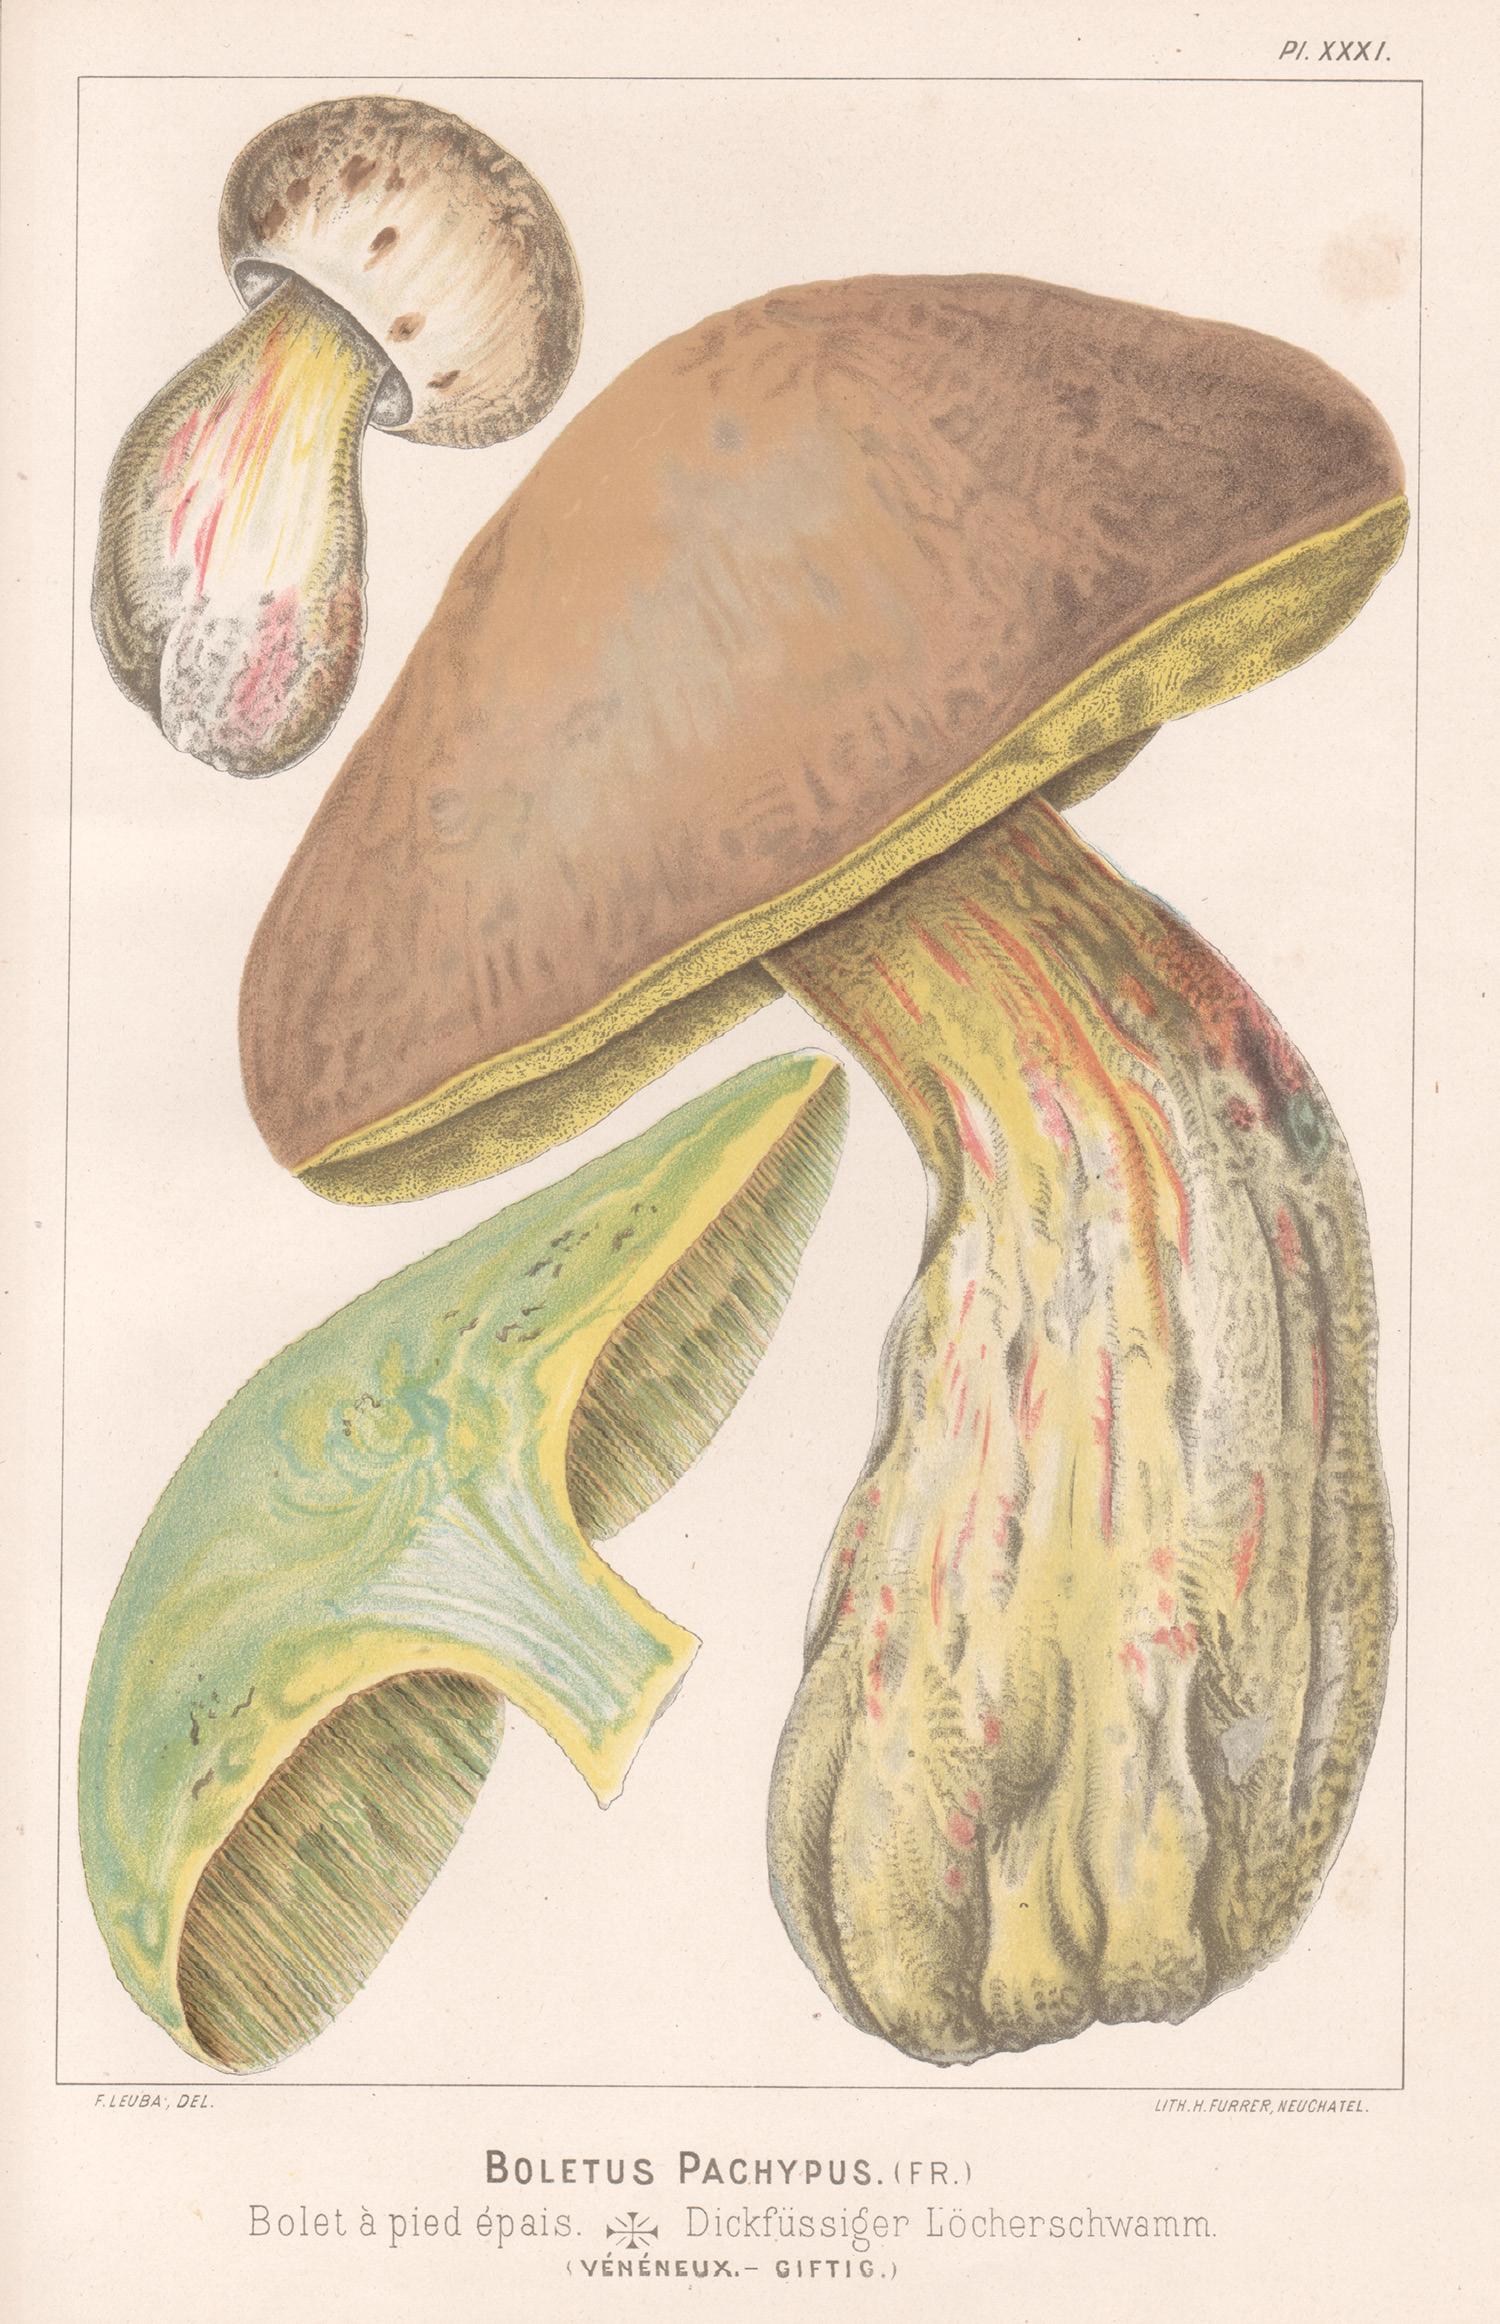 H Furrer after Fritz Leuba Print – Boletus Pachypus, Leuba Antiker chromolithographier Druck aus Pilz fungi